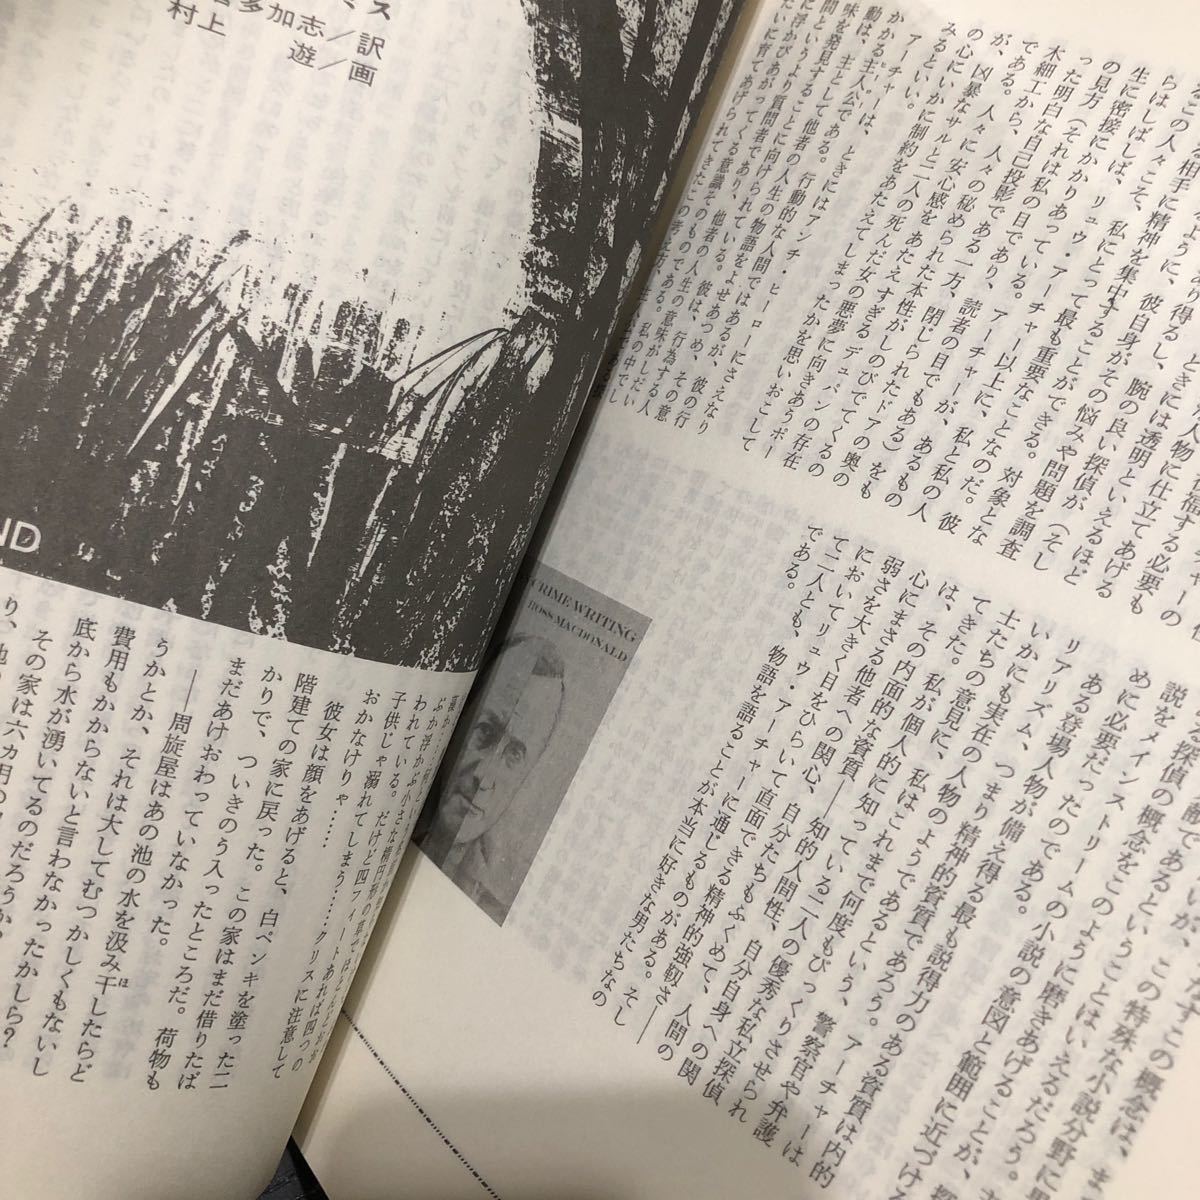 ne70 mistake teli magazine 1976 year 8 month number . river bookstore Showa era 51 year novel literary art thought history economics essay genuine article language 